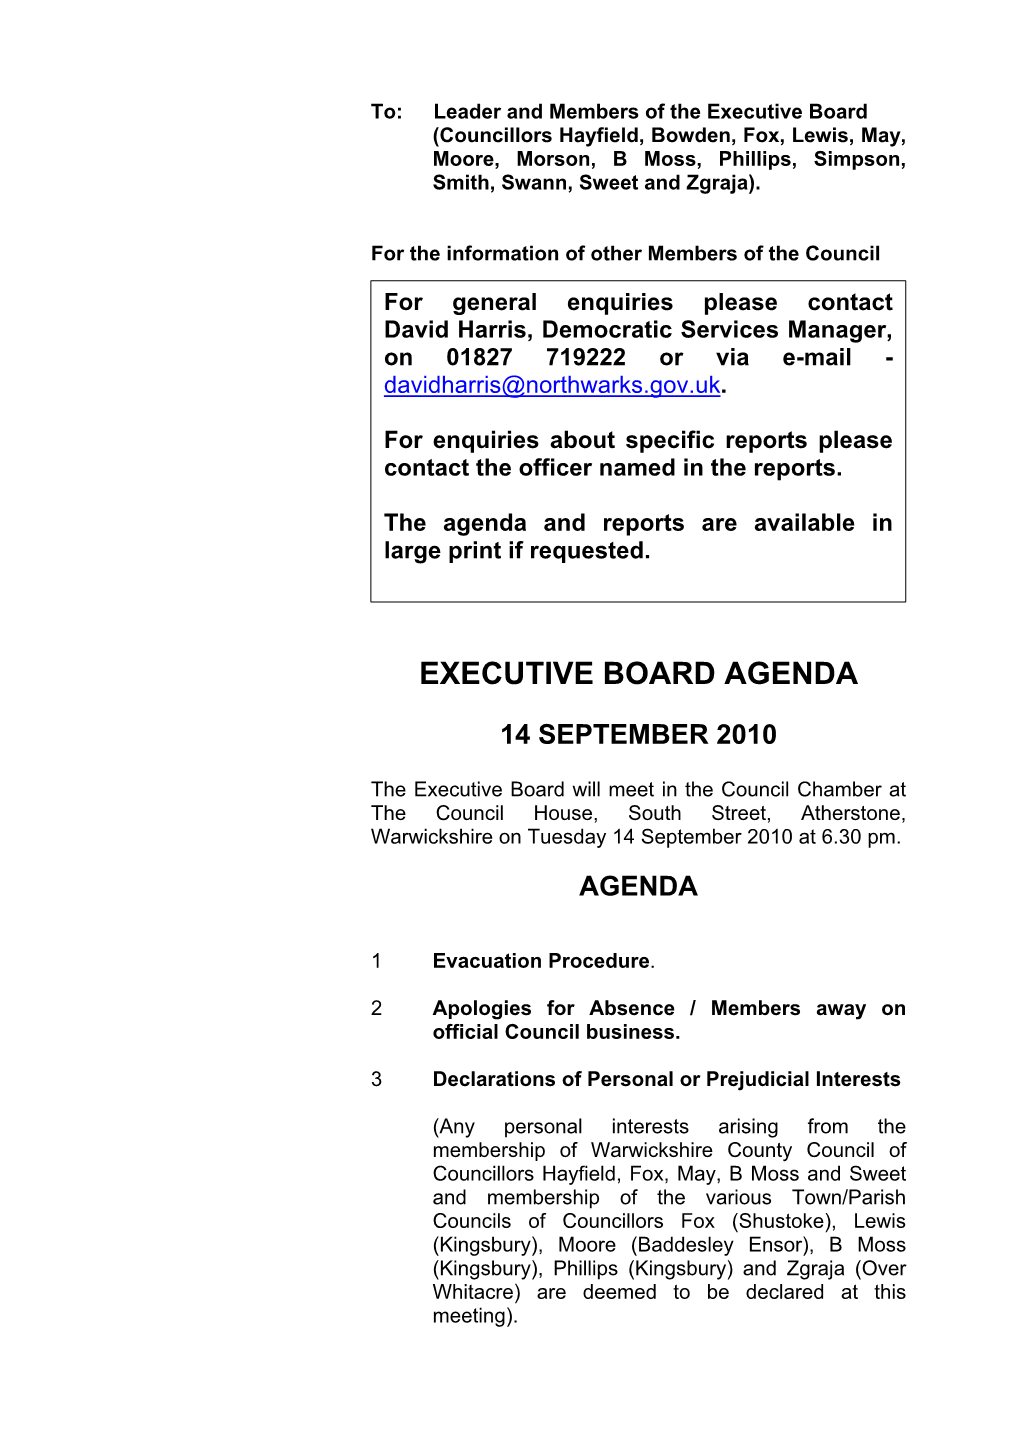 Executive Board Agenda